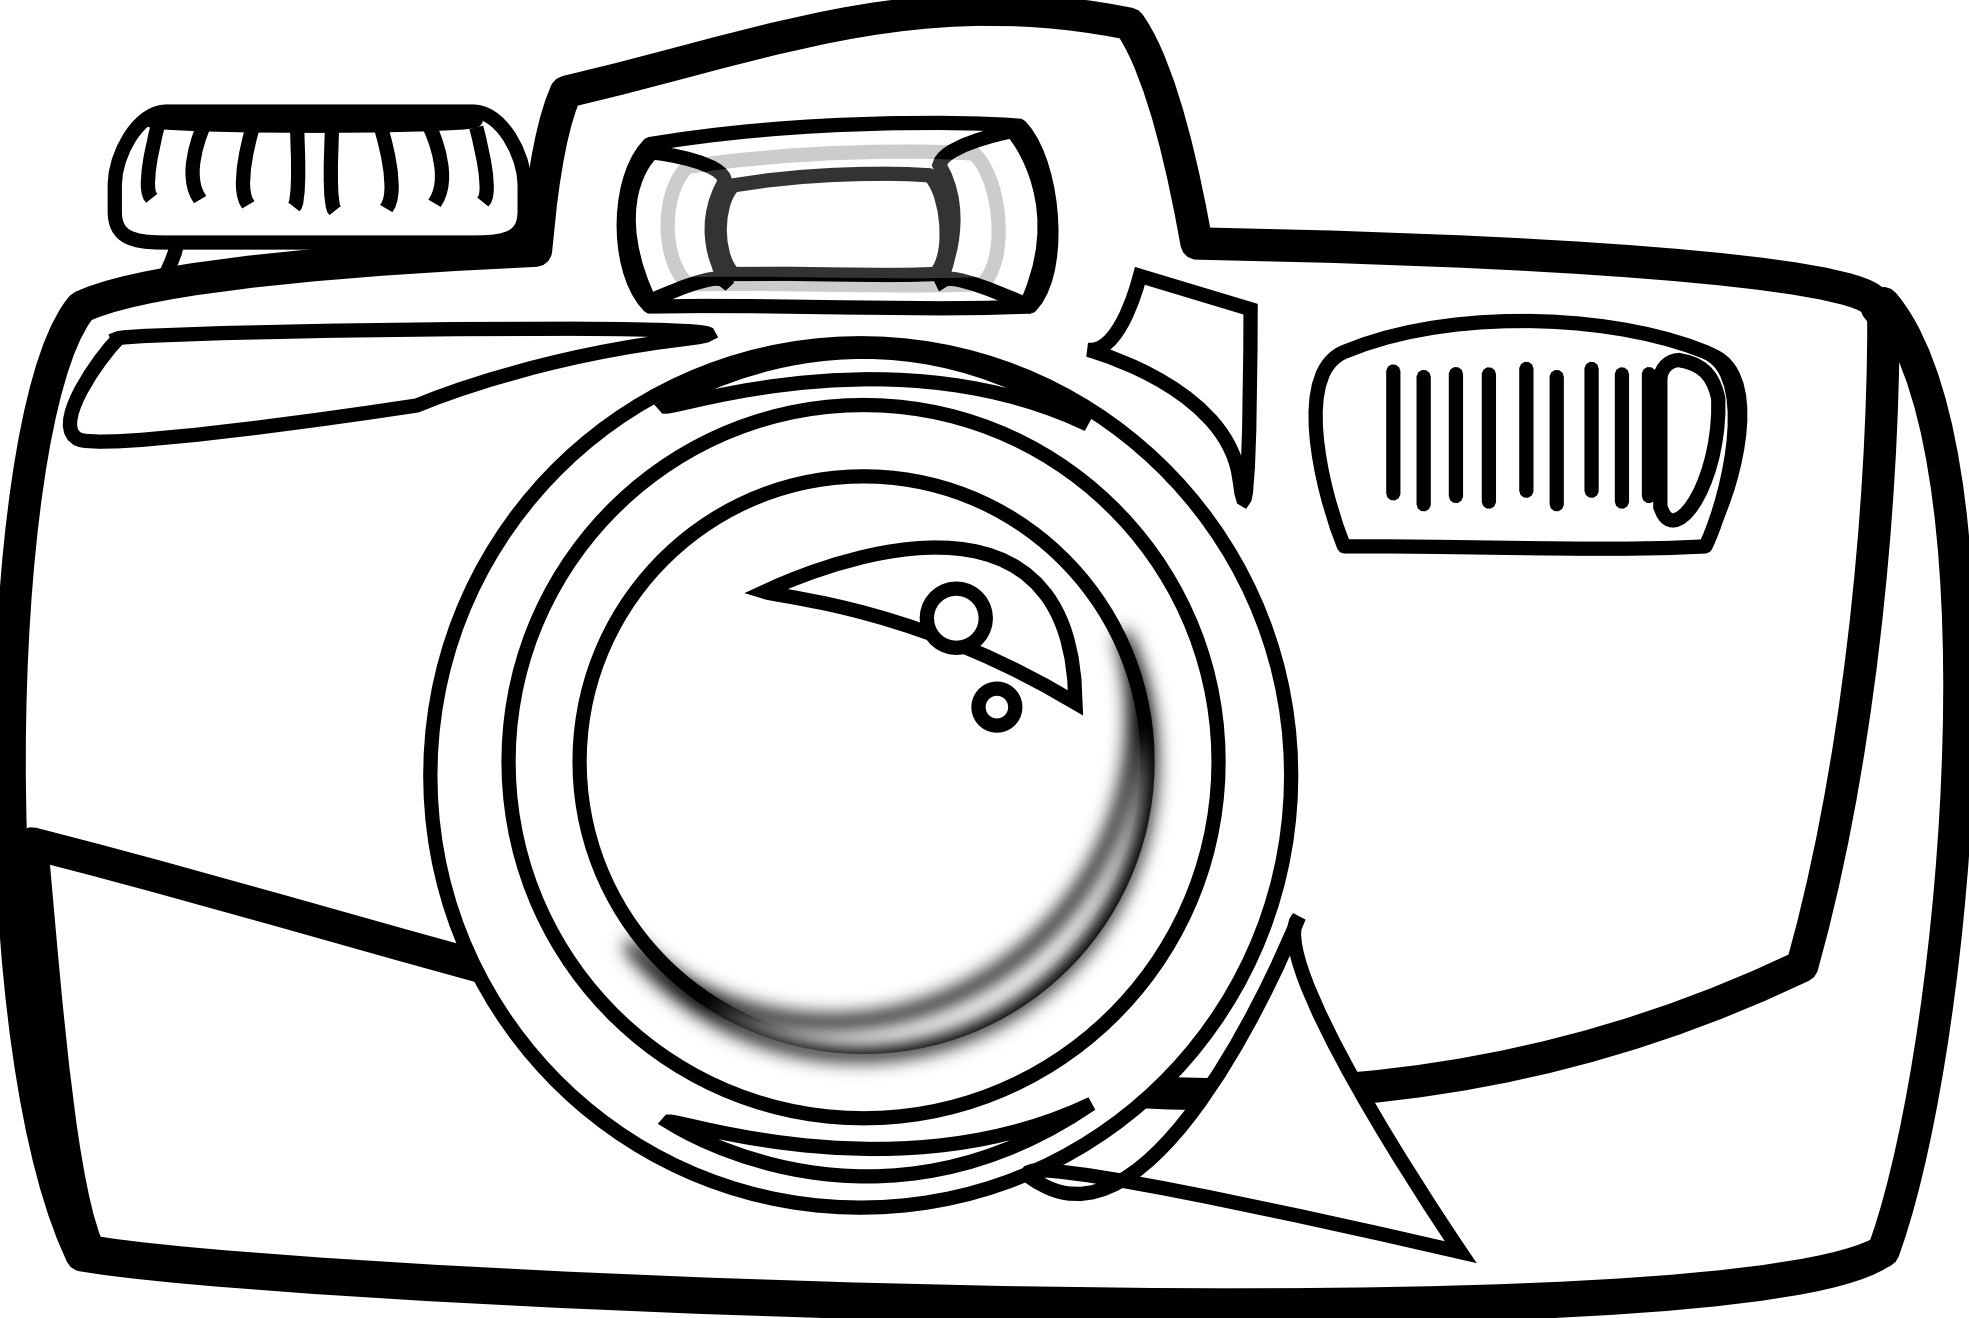 Camera Cartoon Images